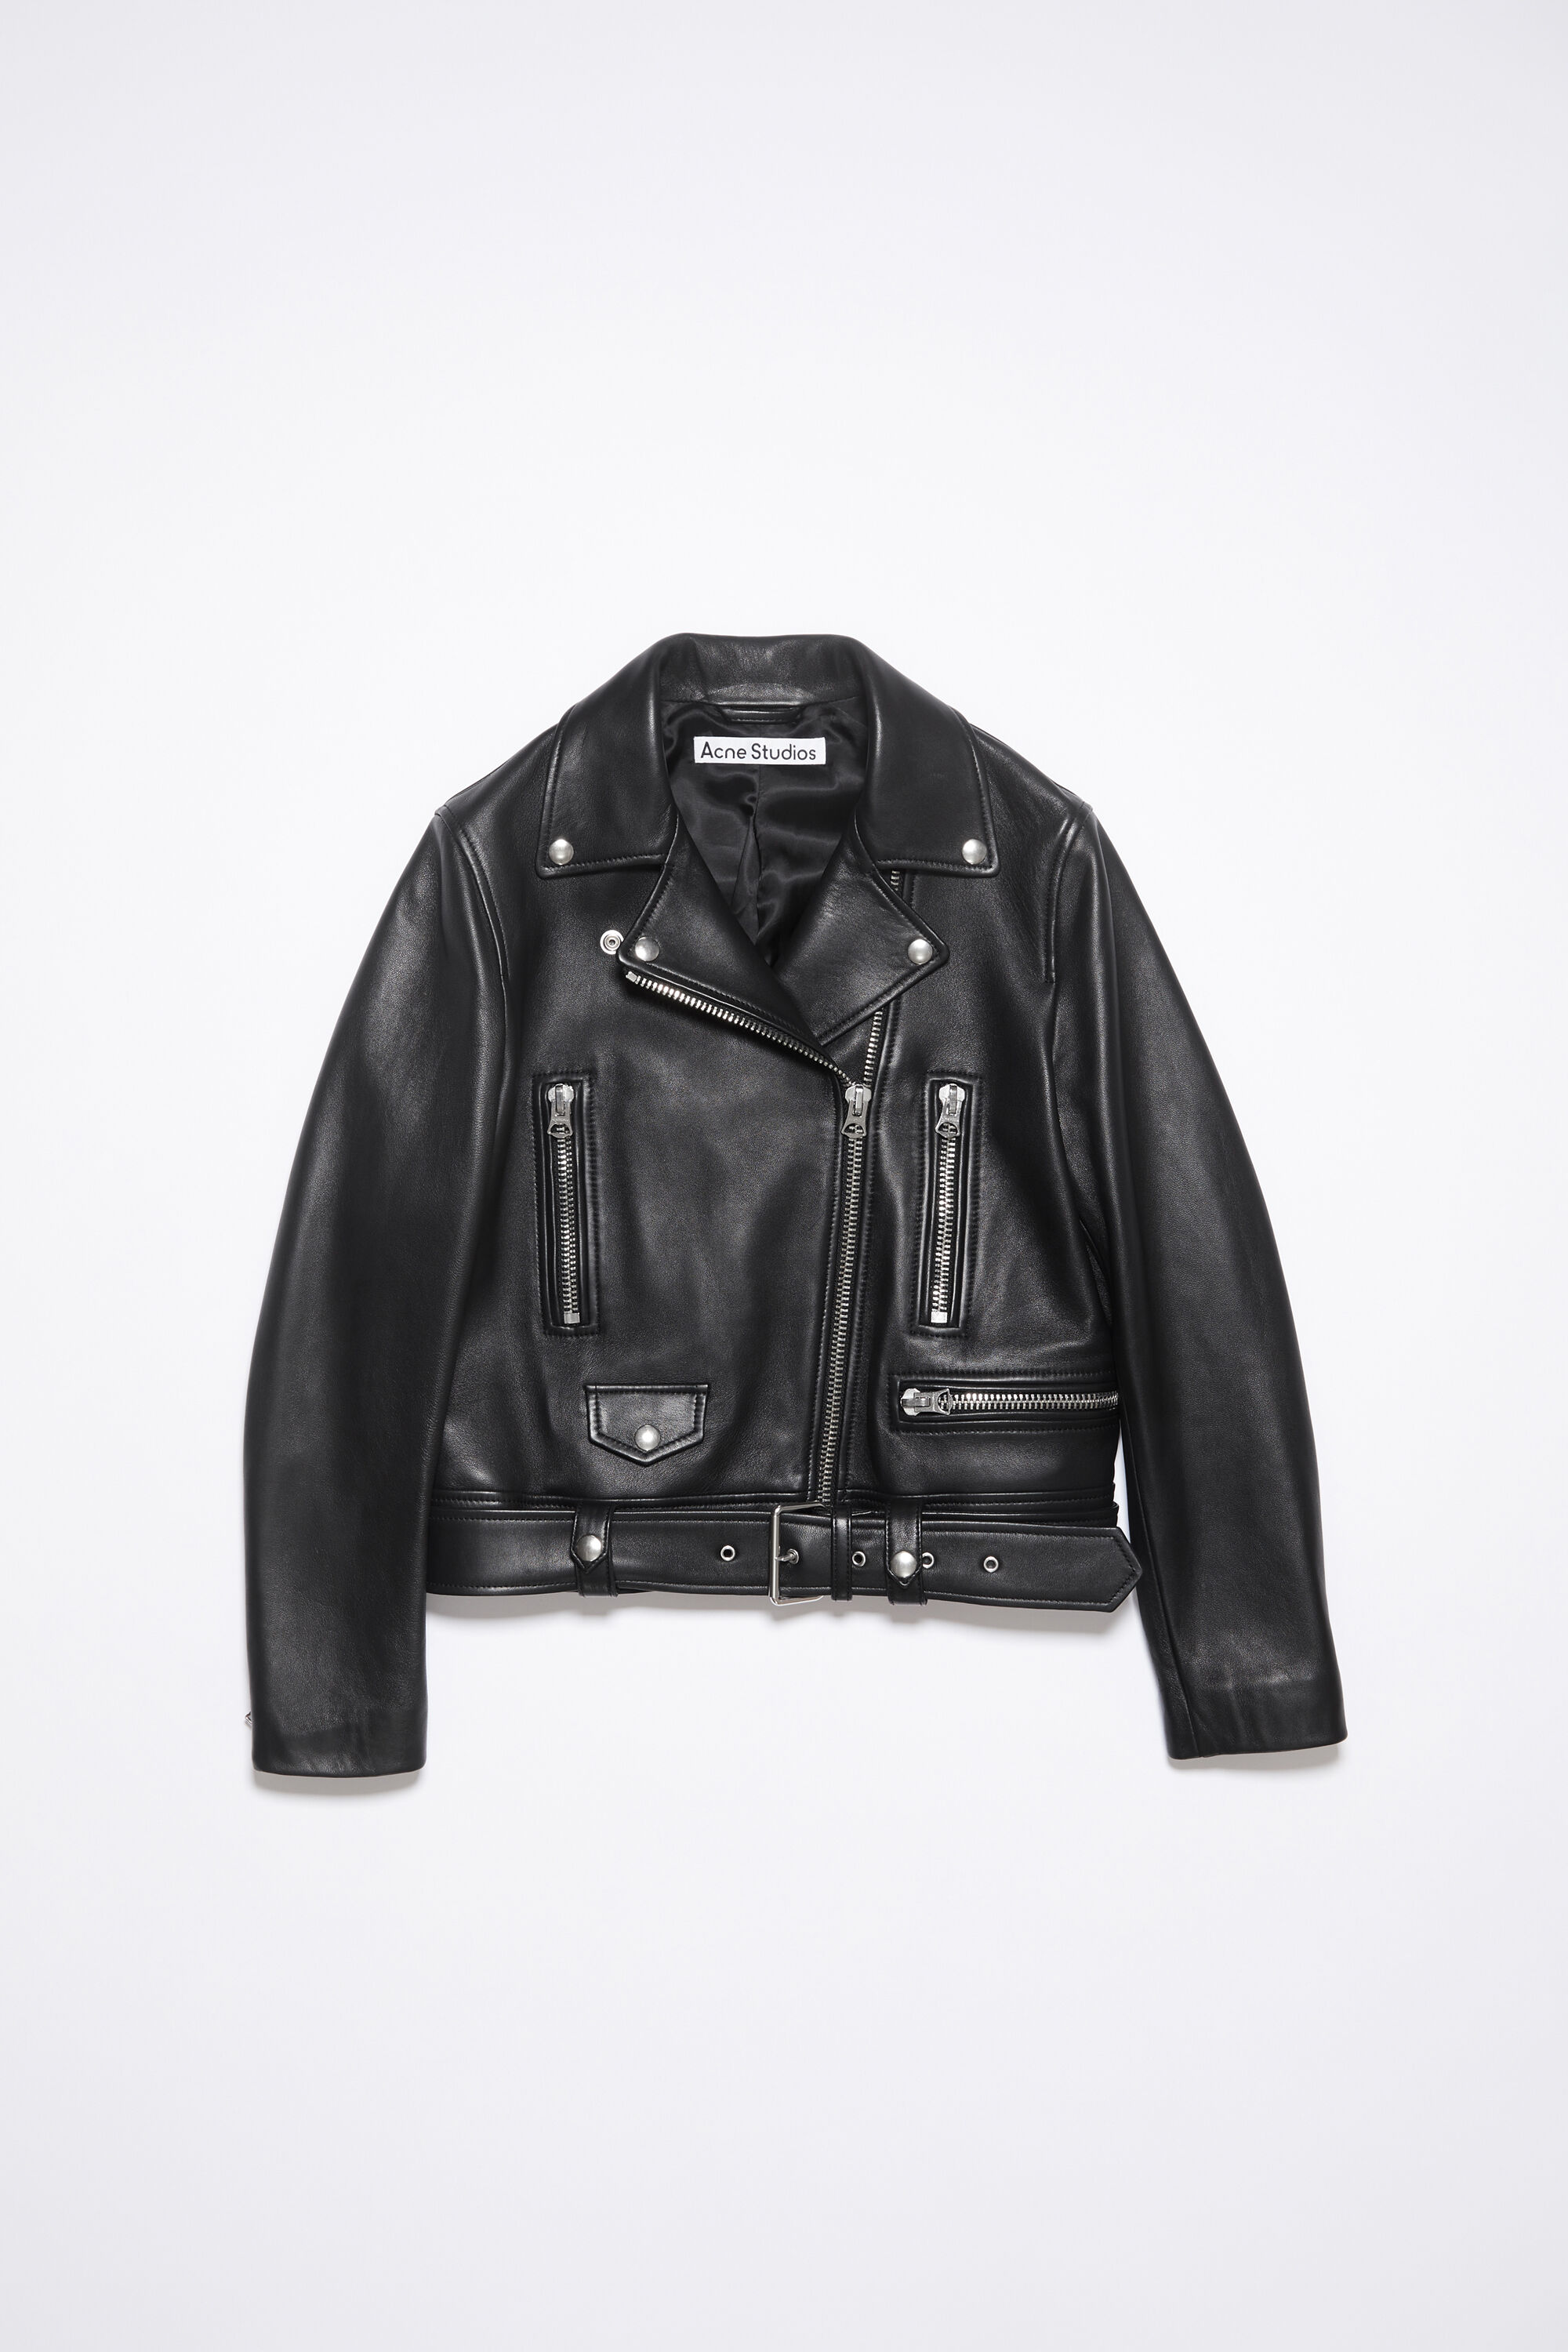 Acne Studios Leder Bikerjacke mit versetztem Reißverschluss in Schwarz für Herren Herren Bekleidung Jacken Lederjacken 